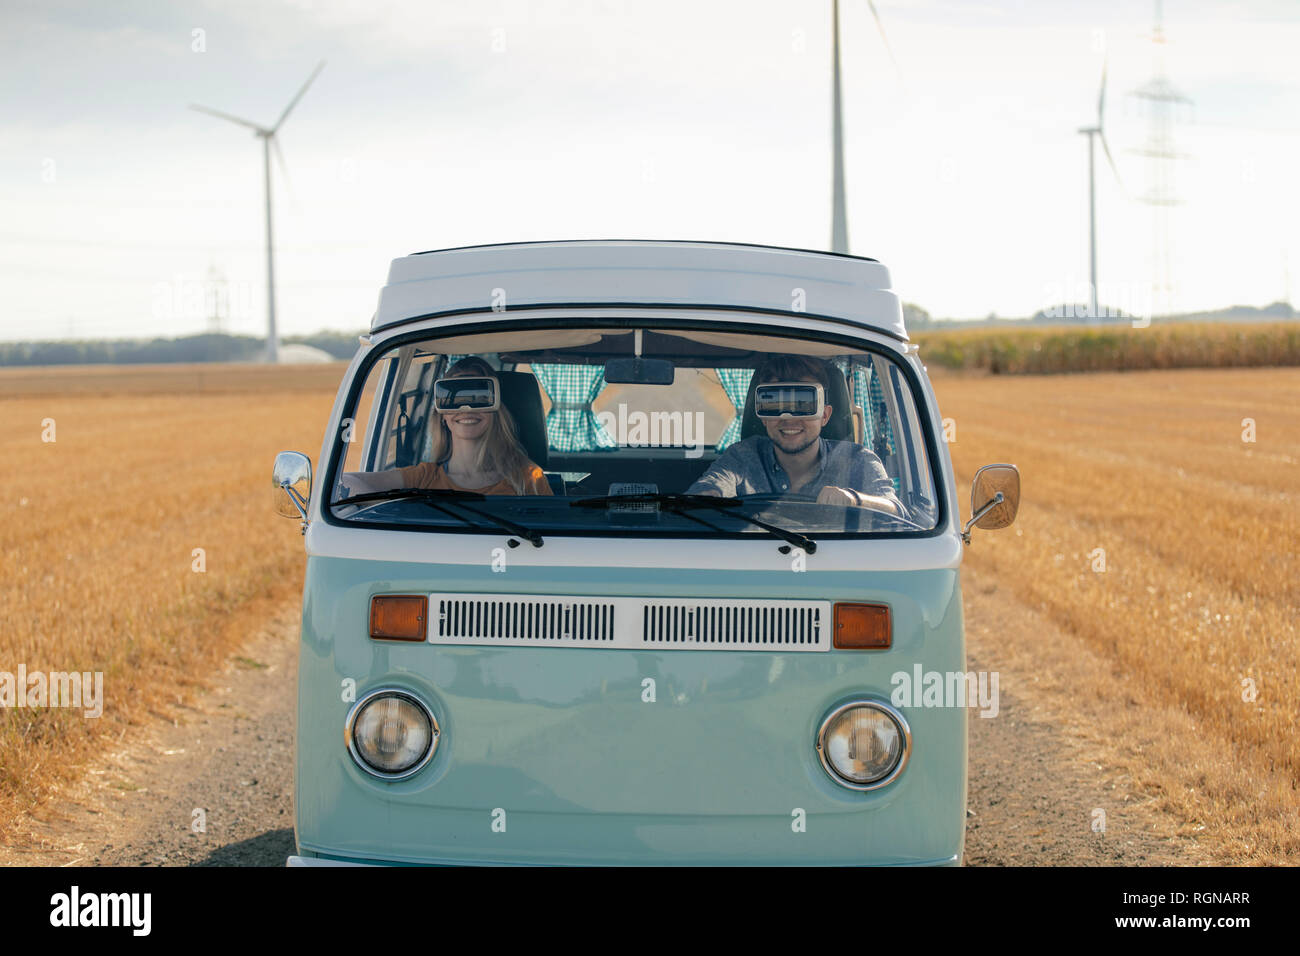 Smiling couple wearing VR glasses driving camper van in rural landscape Stock Photo